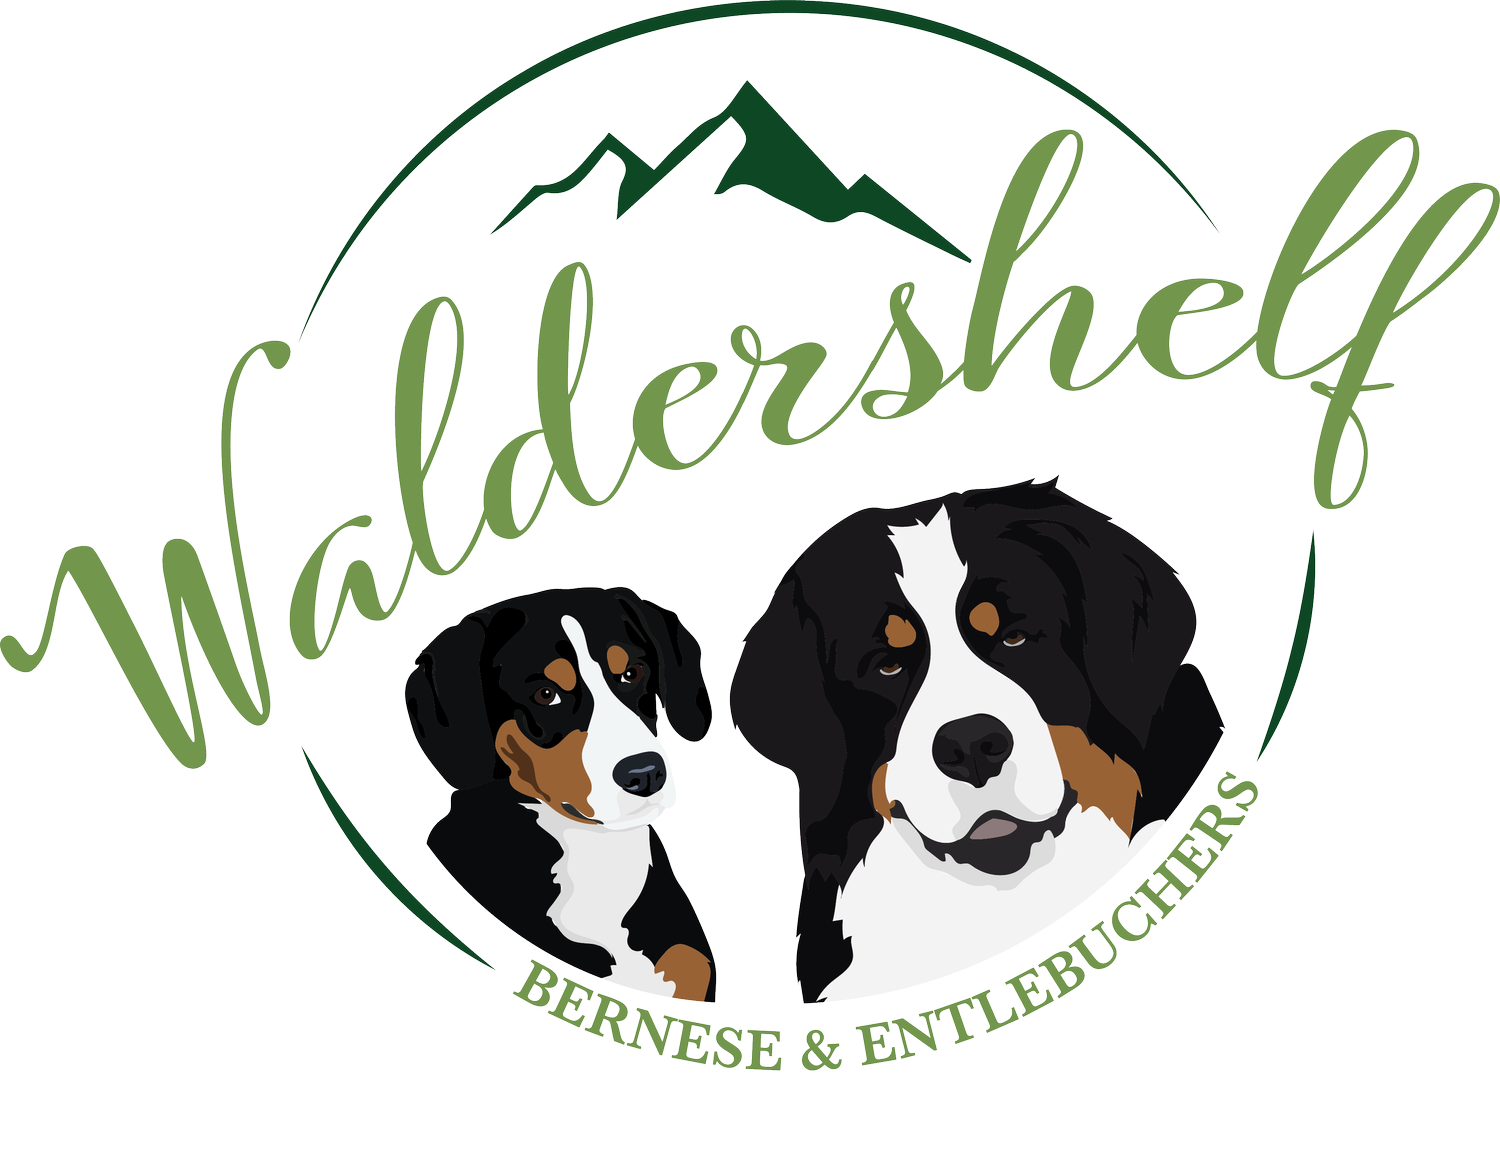 Waldershelf Bernese and Entlebucher Mountain Dogs